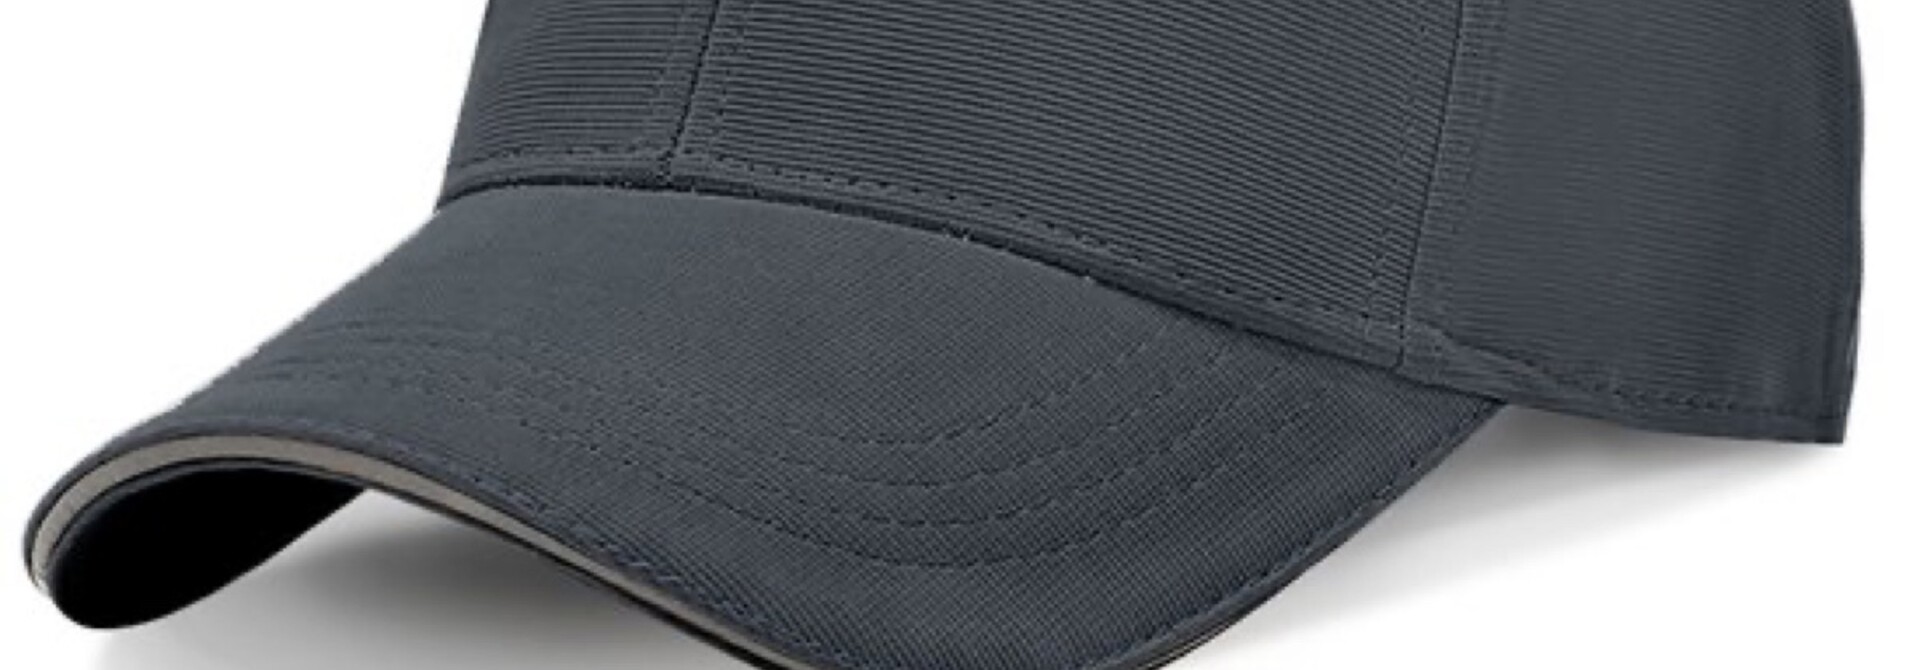 Baseball Cap -  With Reflective Edge - Adjustable Fit Cap - Trucker Hat - Head Circumference 55-60 CM - Unisex - Grey